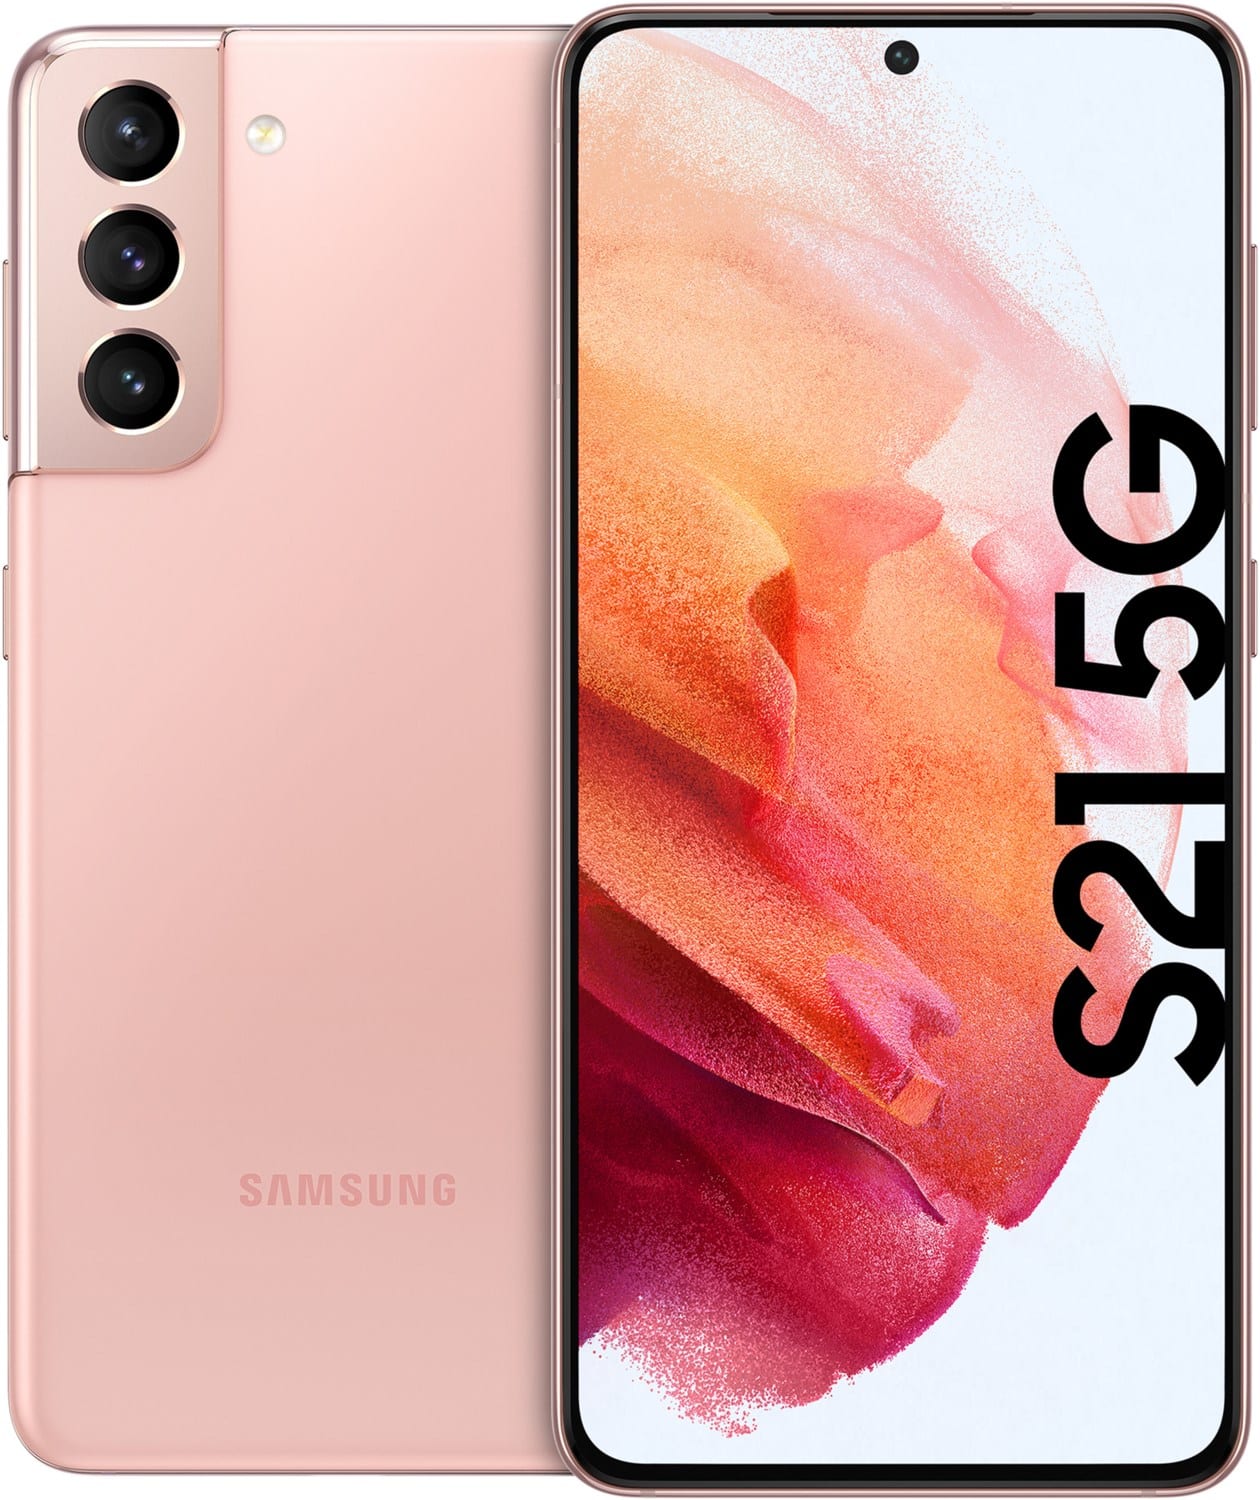 Samsung Galaxy S21 5G (128GB) T-Mobile Smartphone phantom pink